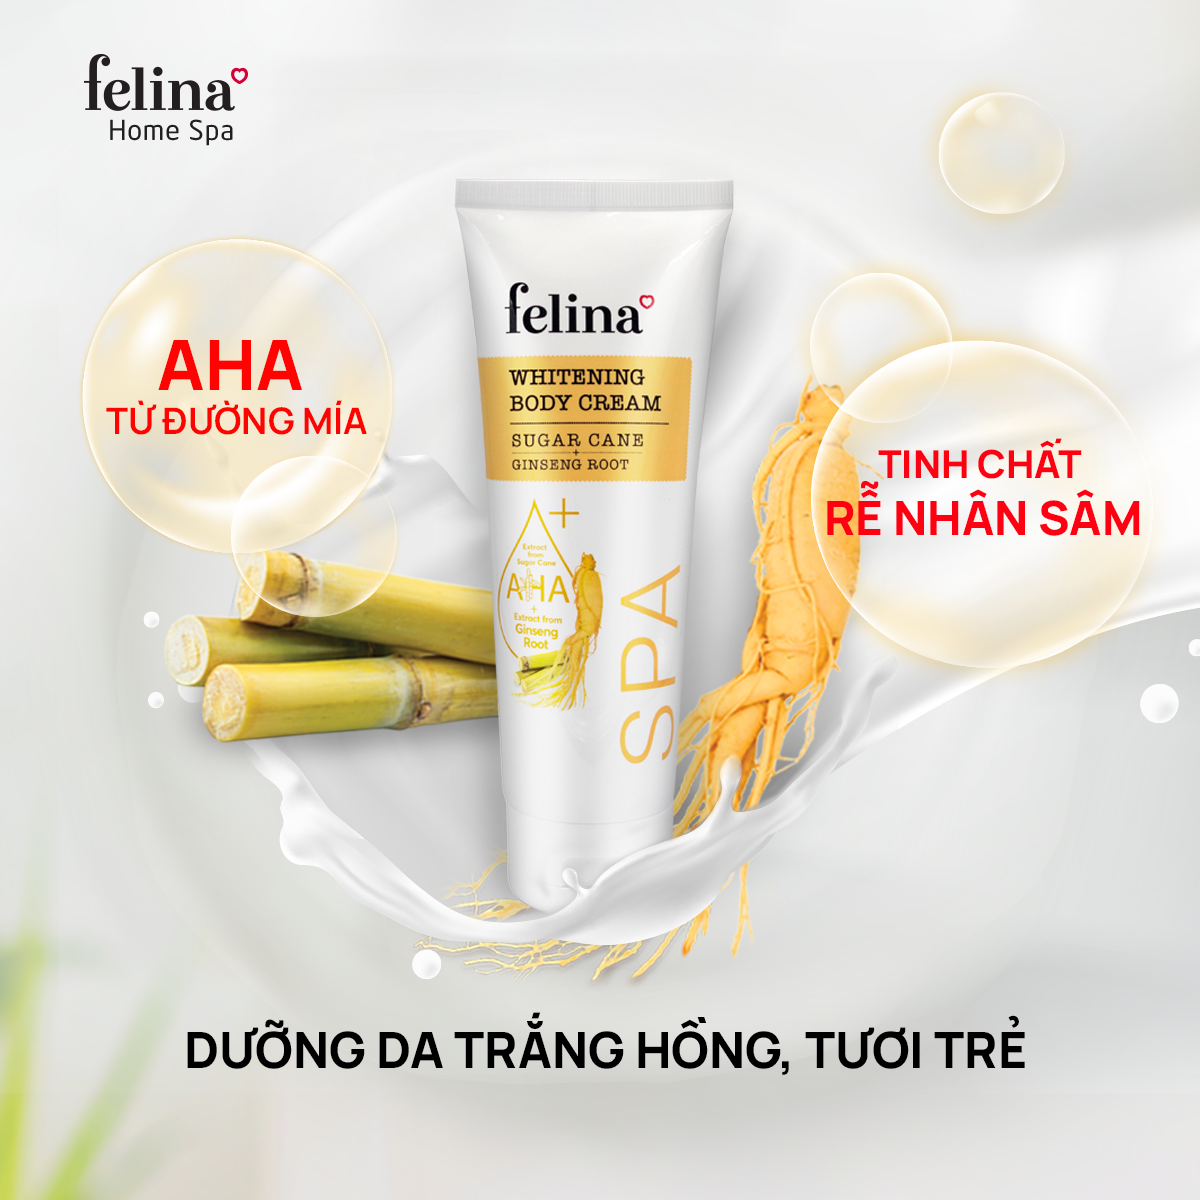 Felina Whitening Body Cream - Sugar Cane Ginseng Root: